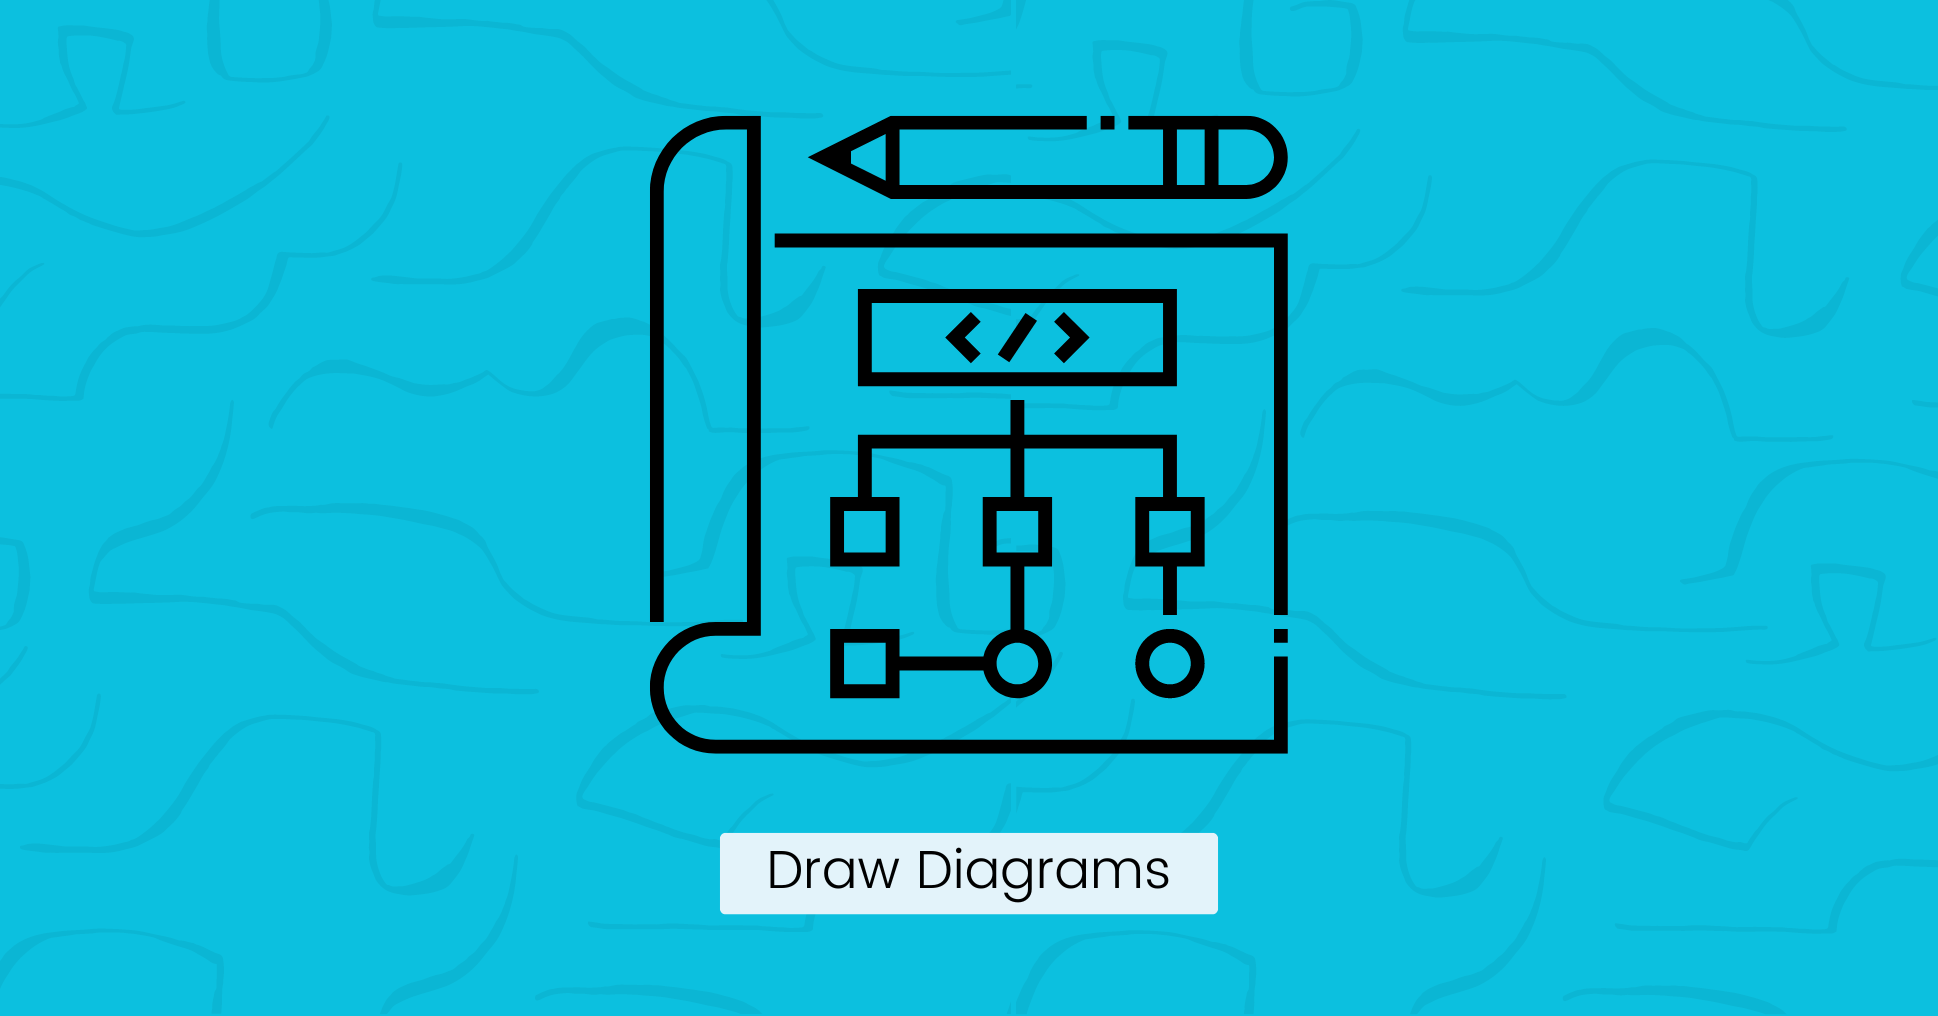 Draw Diagrams